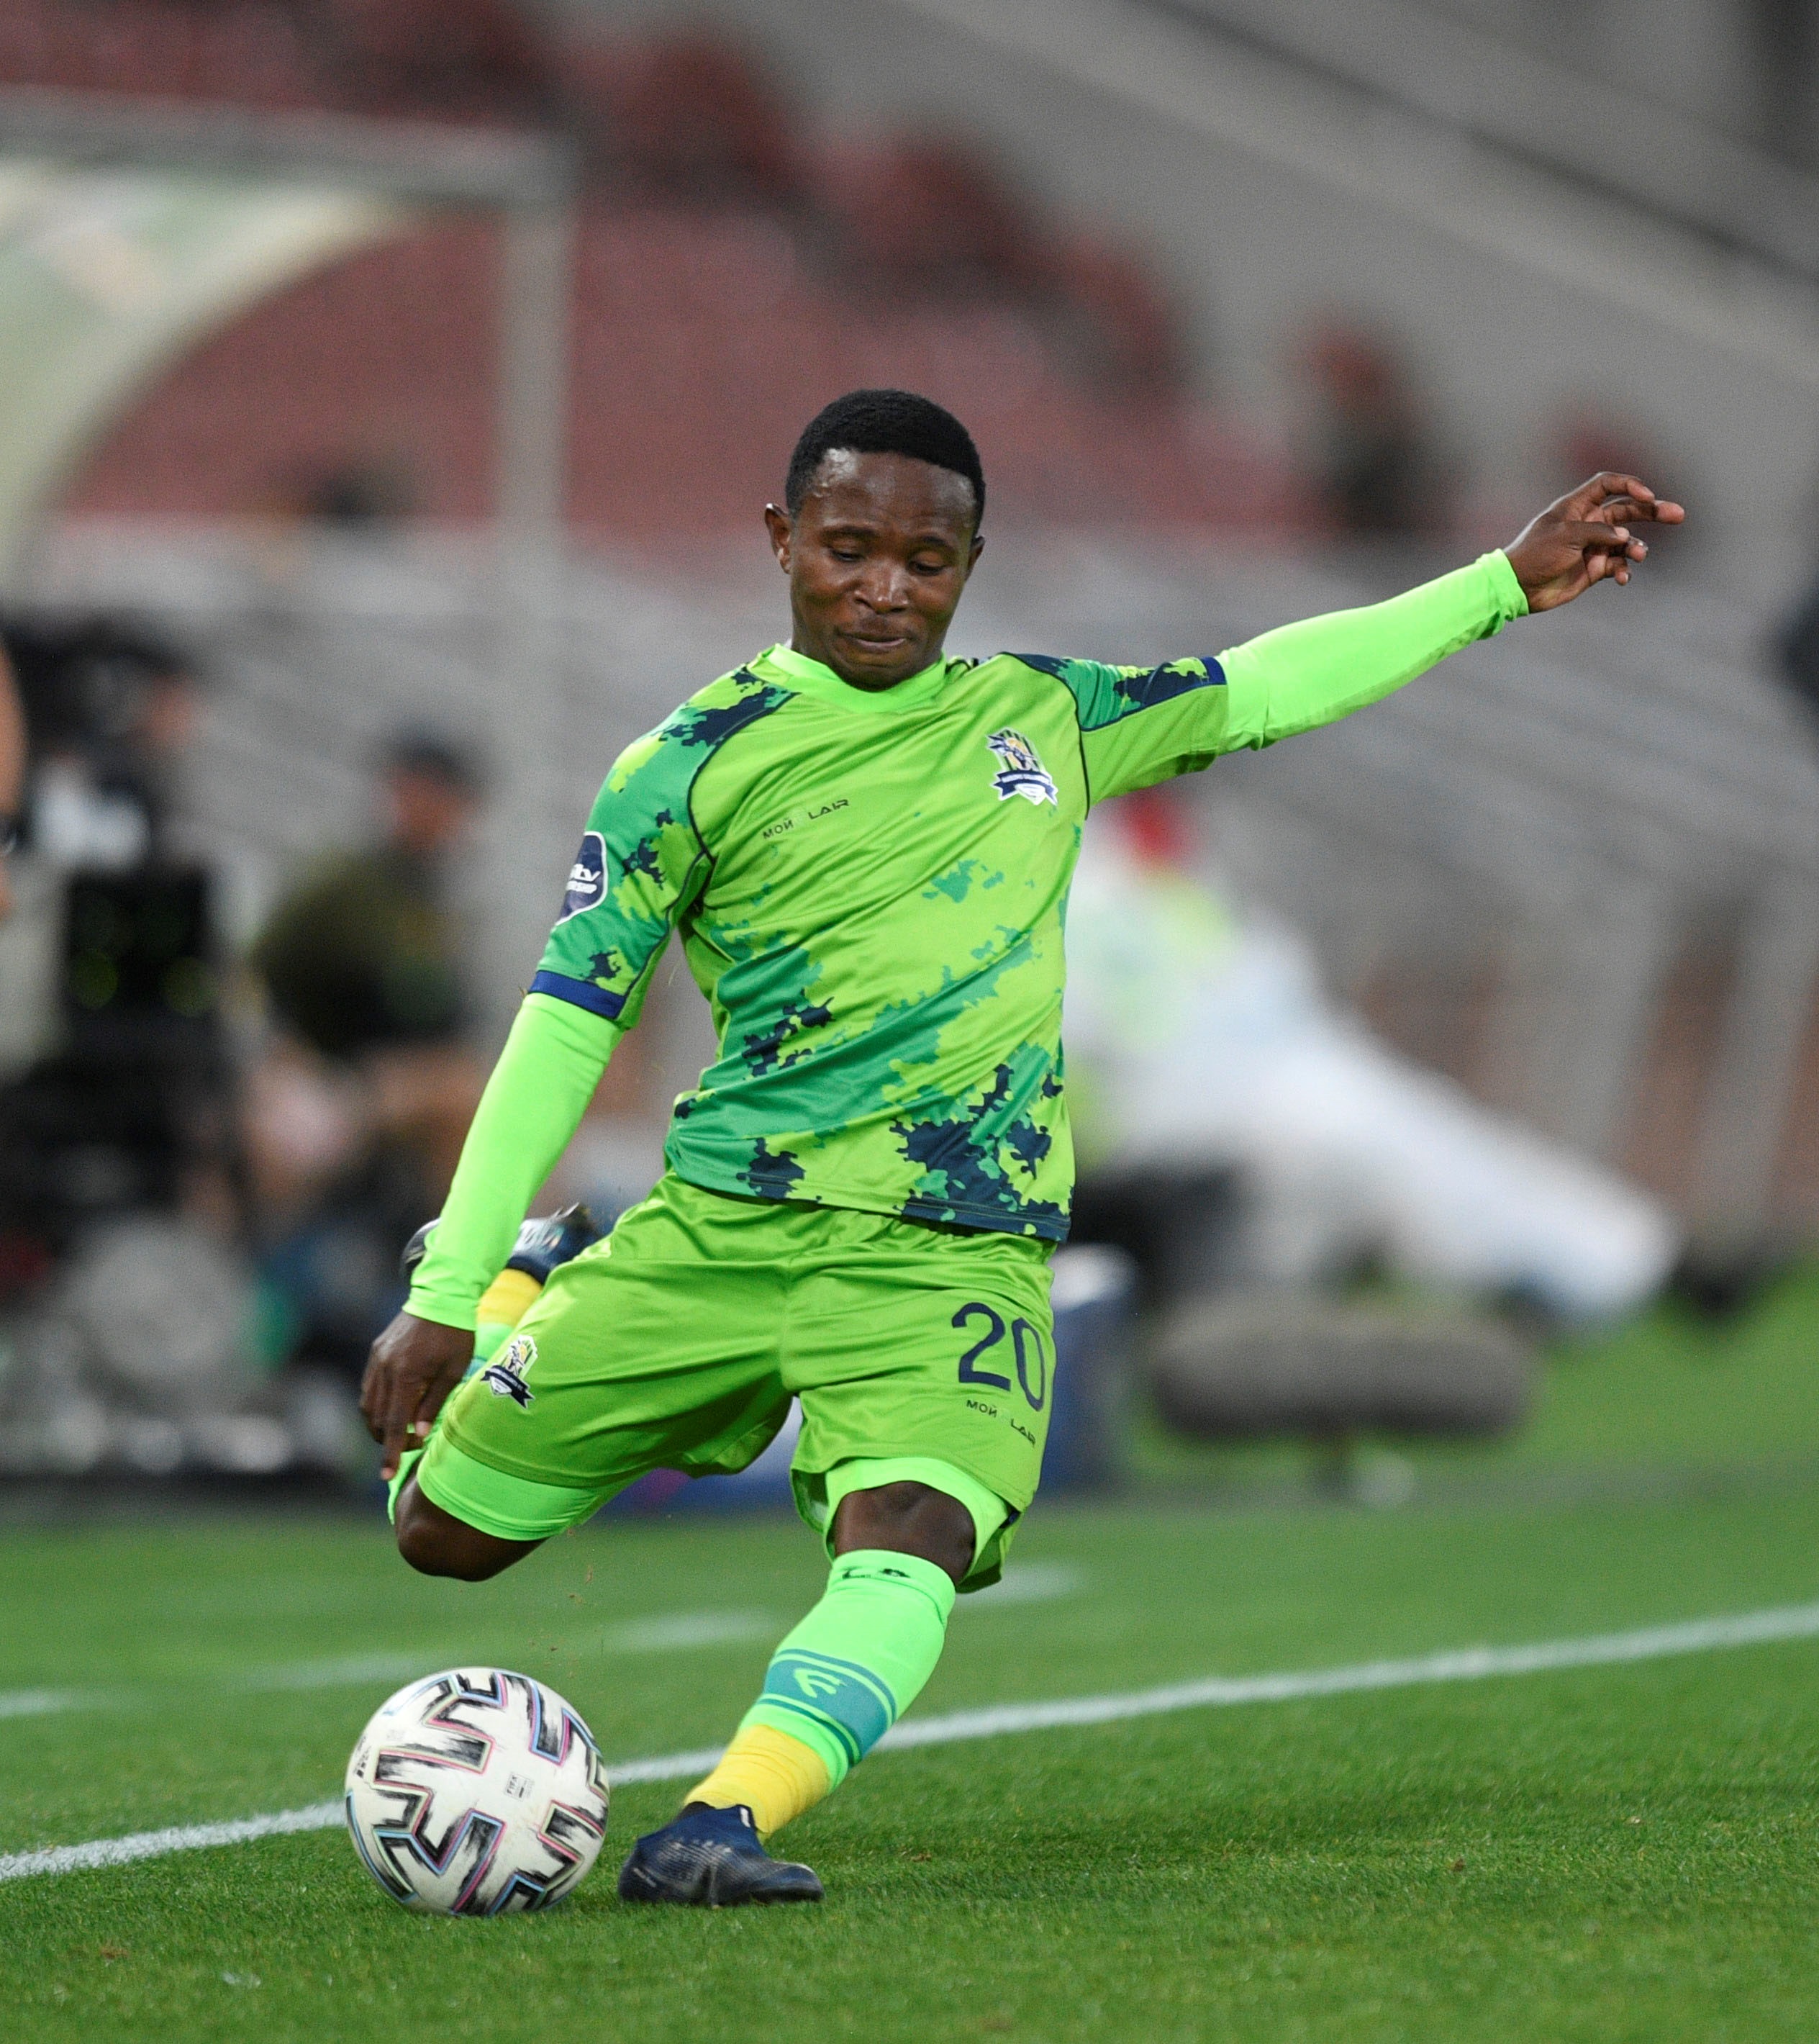 Unsettled Pirates midfielder Ndlovu may head back to Maritzburg